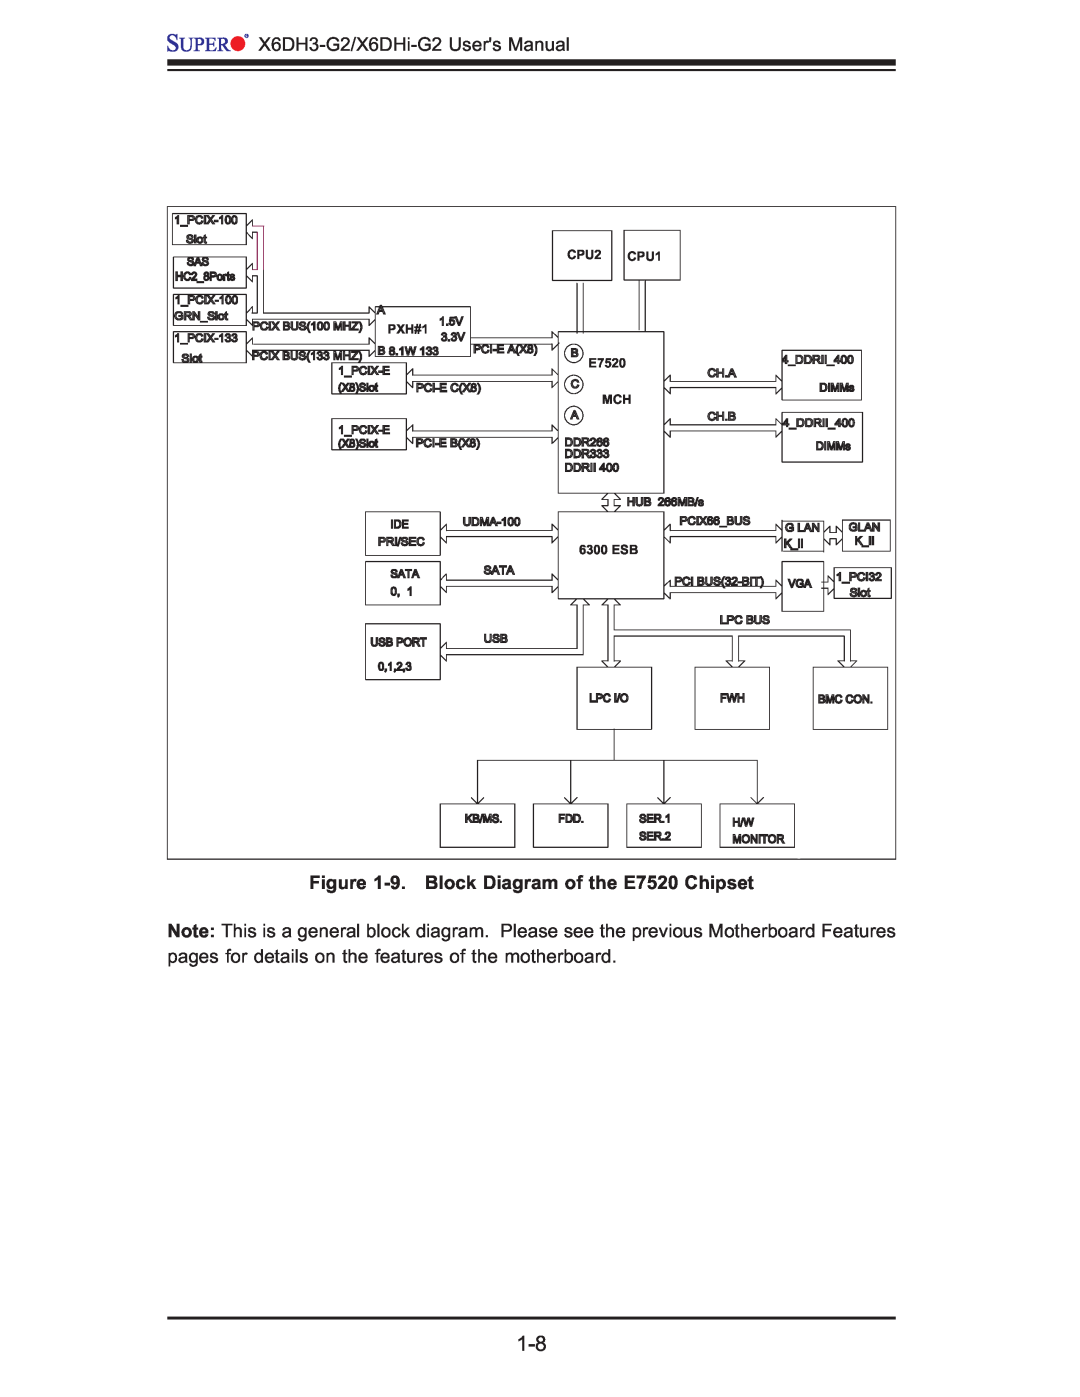 SUPER MICRO Computer X6DHi-G2, X6DH3-G2 user manual 9. Block Diagram of the E7520 Chipset, CPU2, CPU1, PXH#1, 6300 ESB 